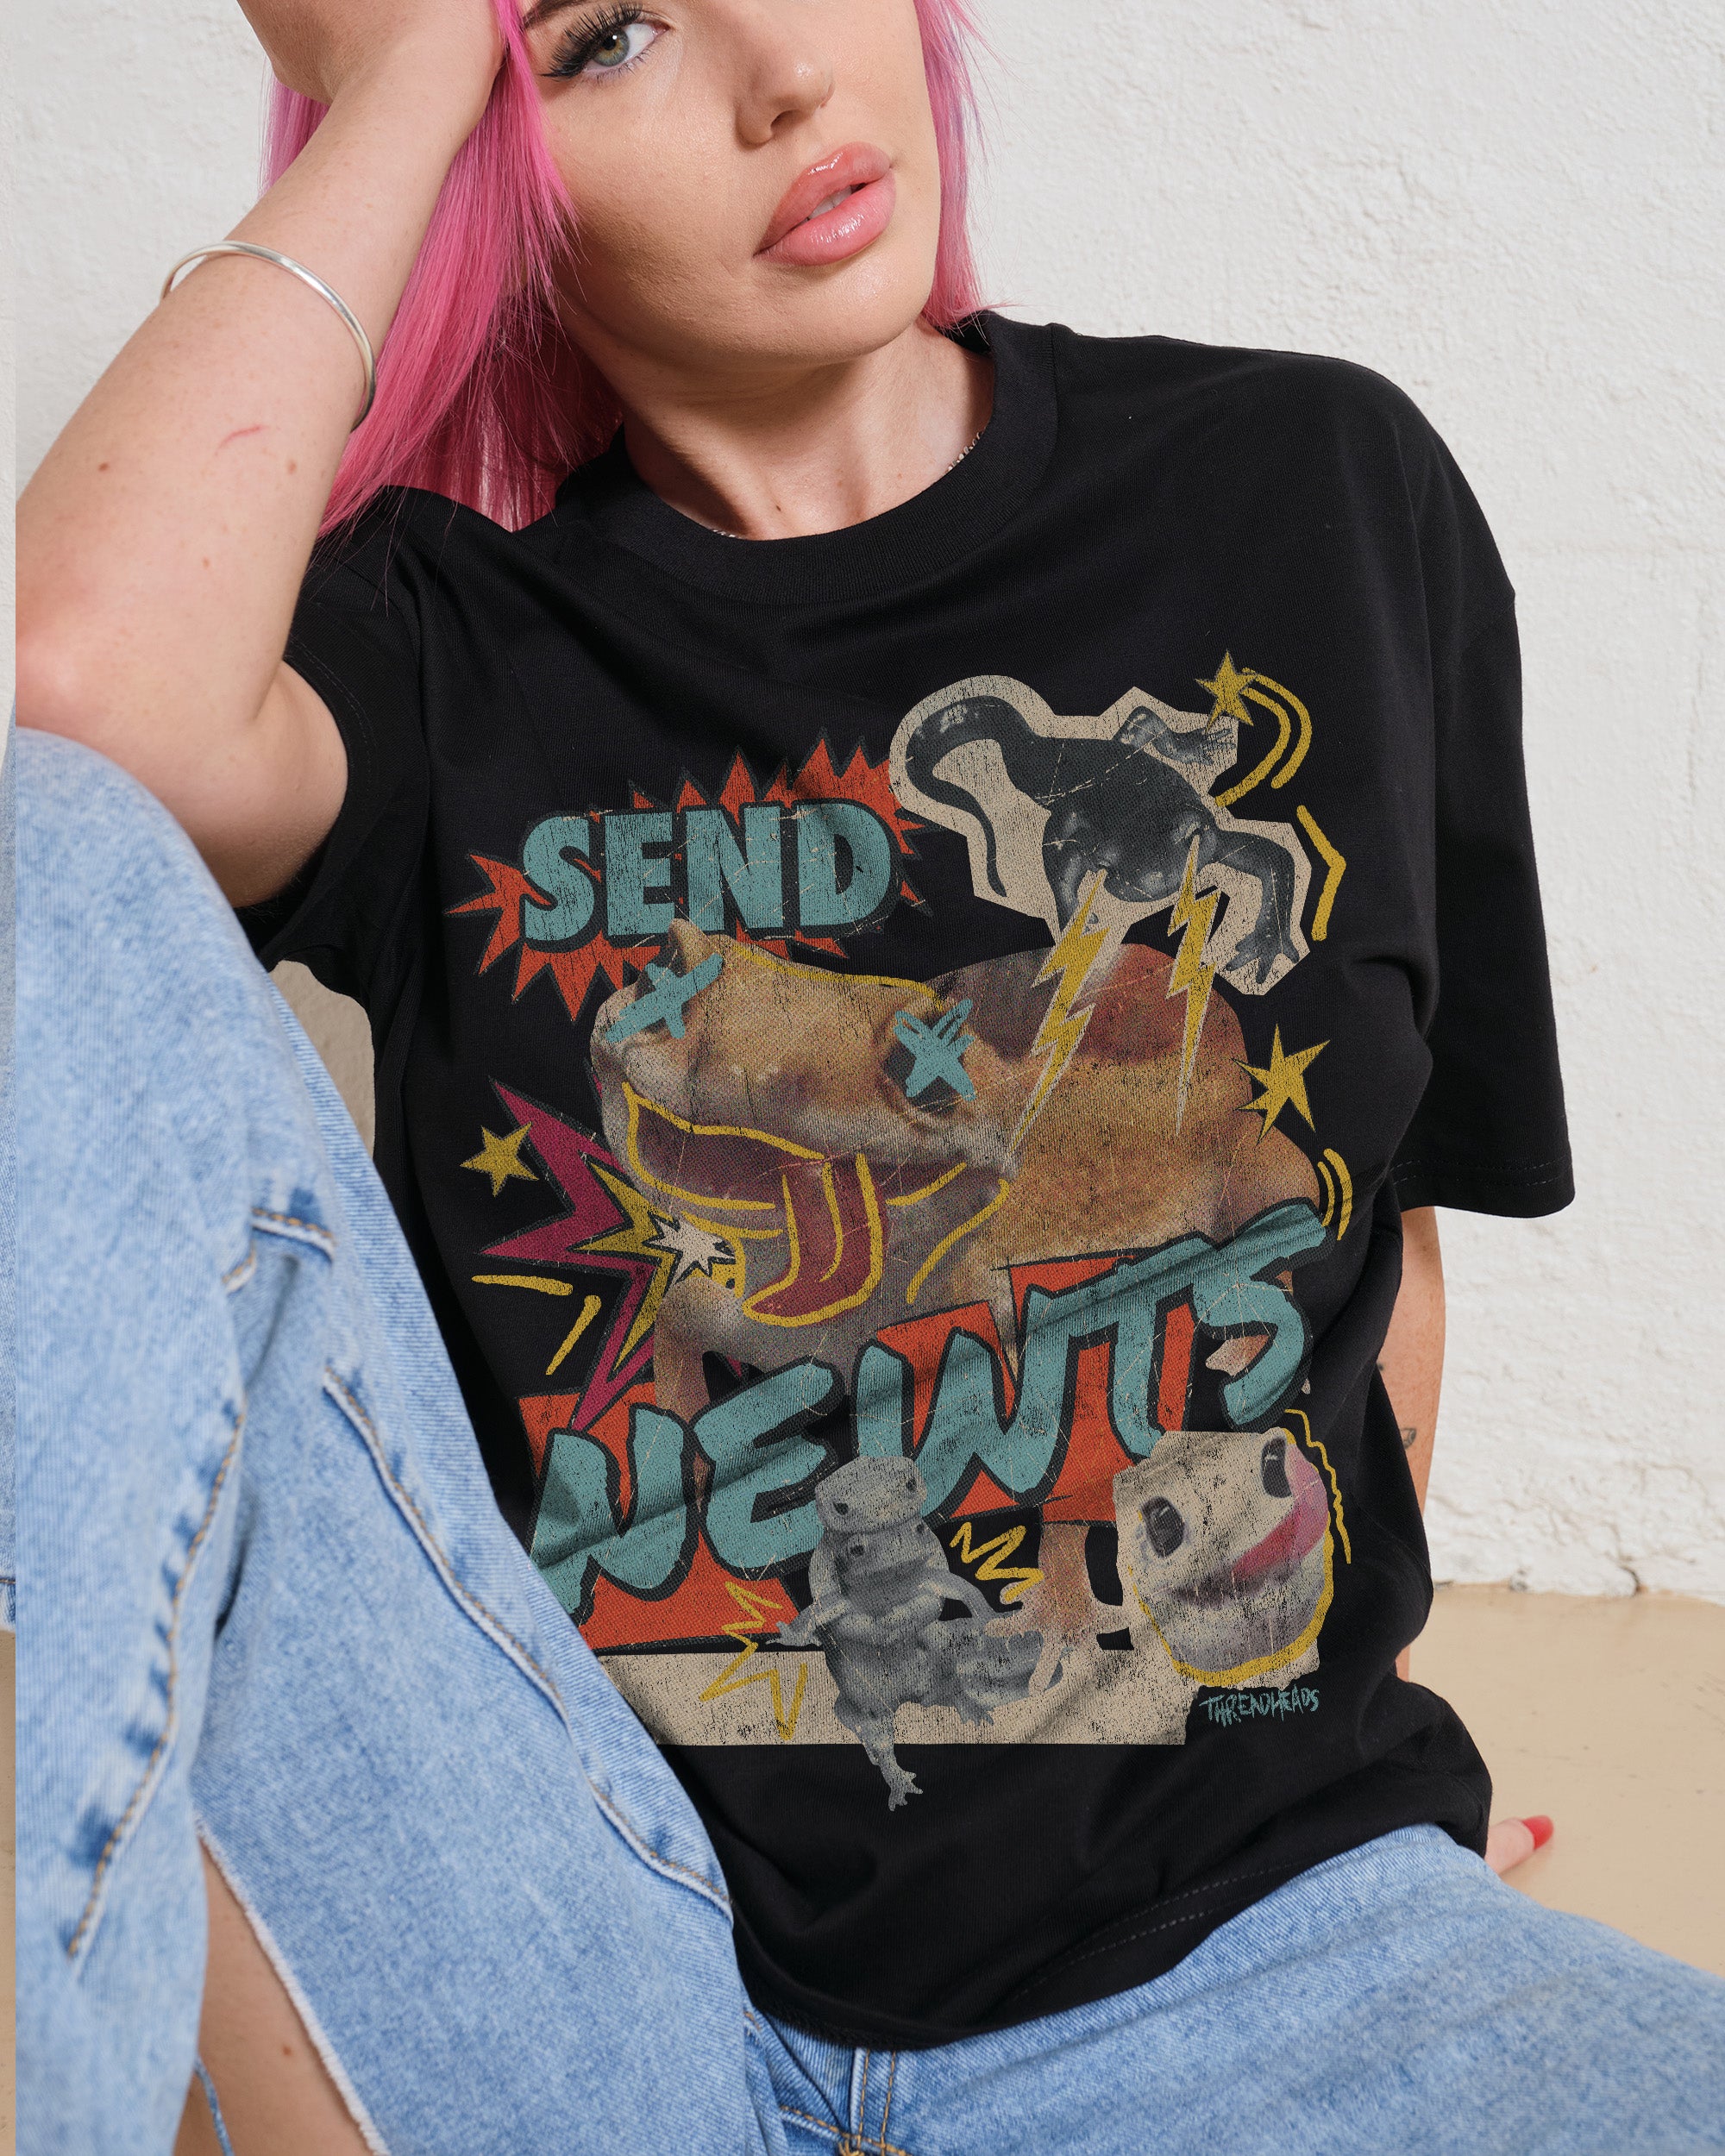 Send Newts T-Shirt Australia Online Black